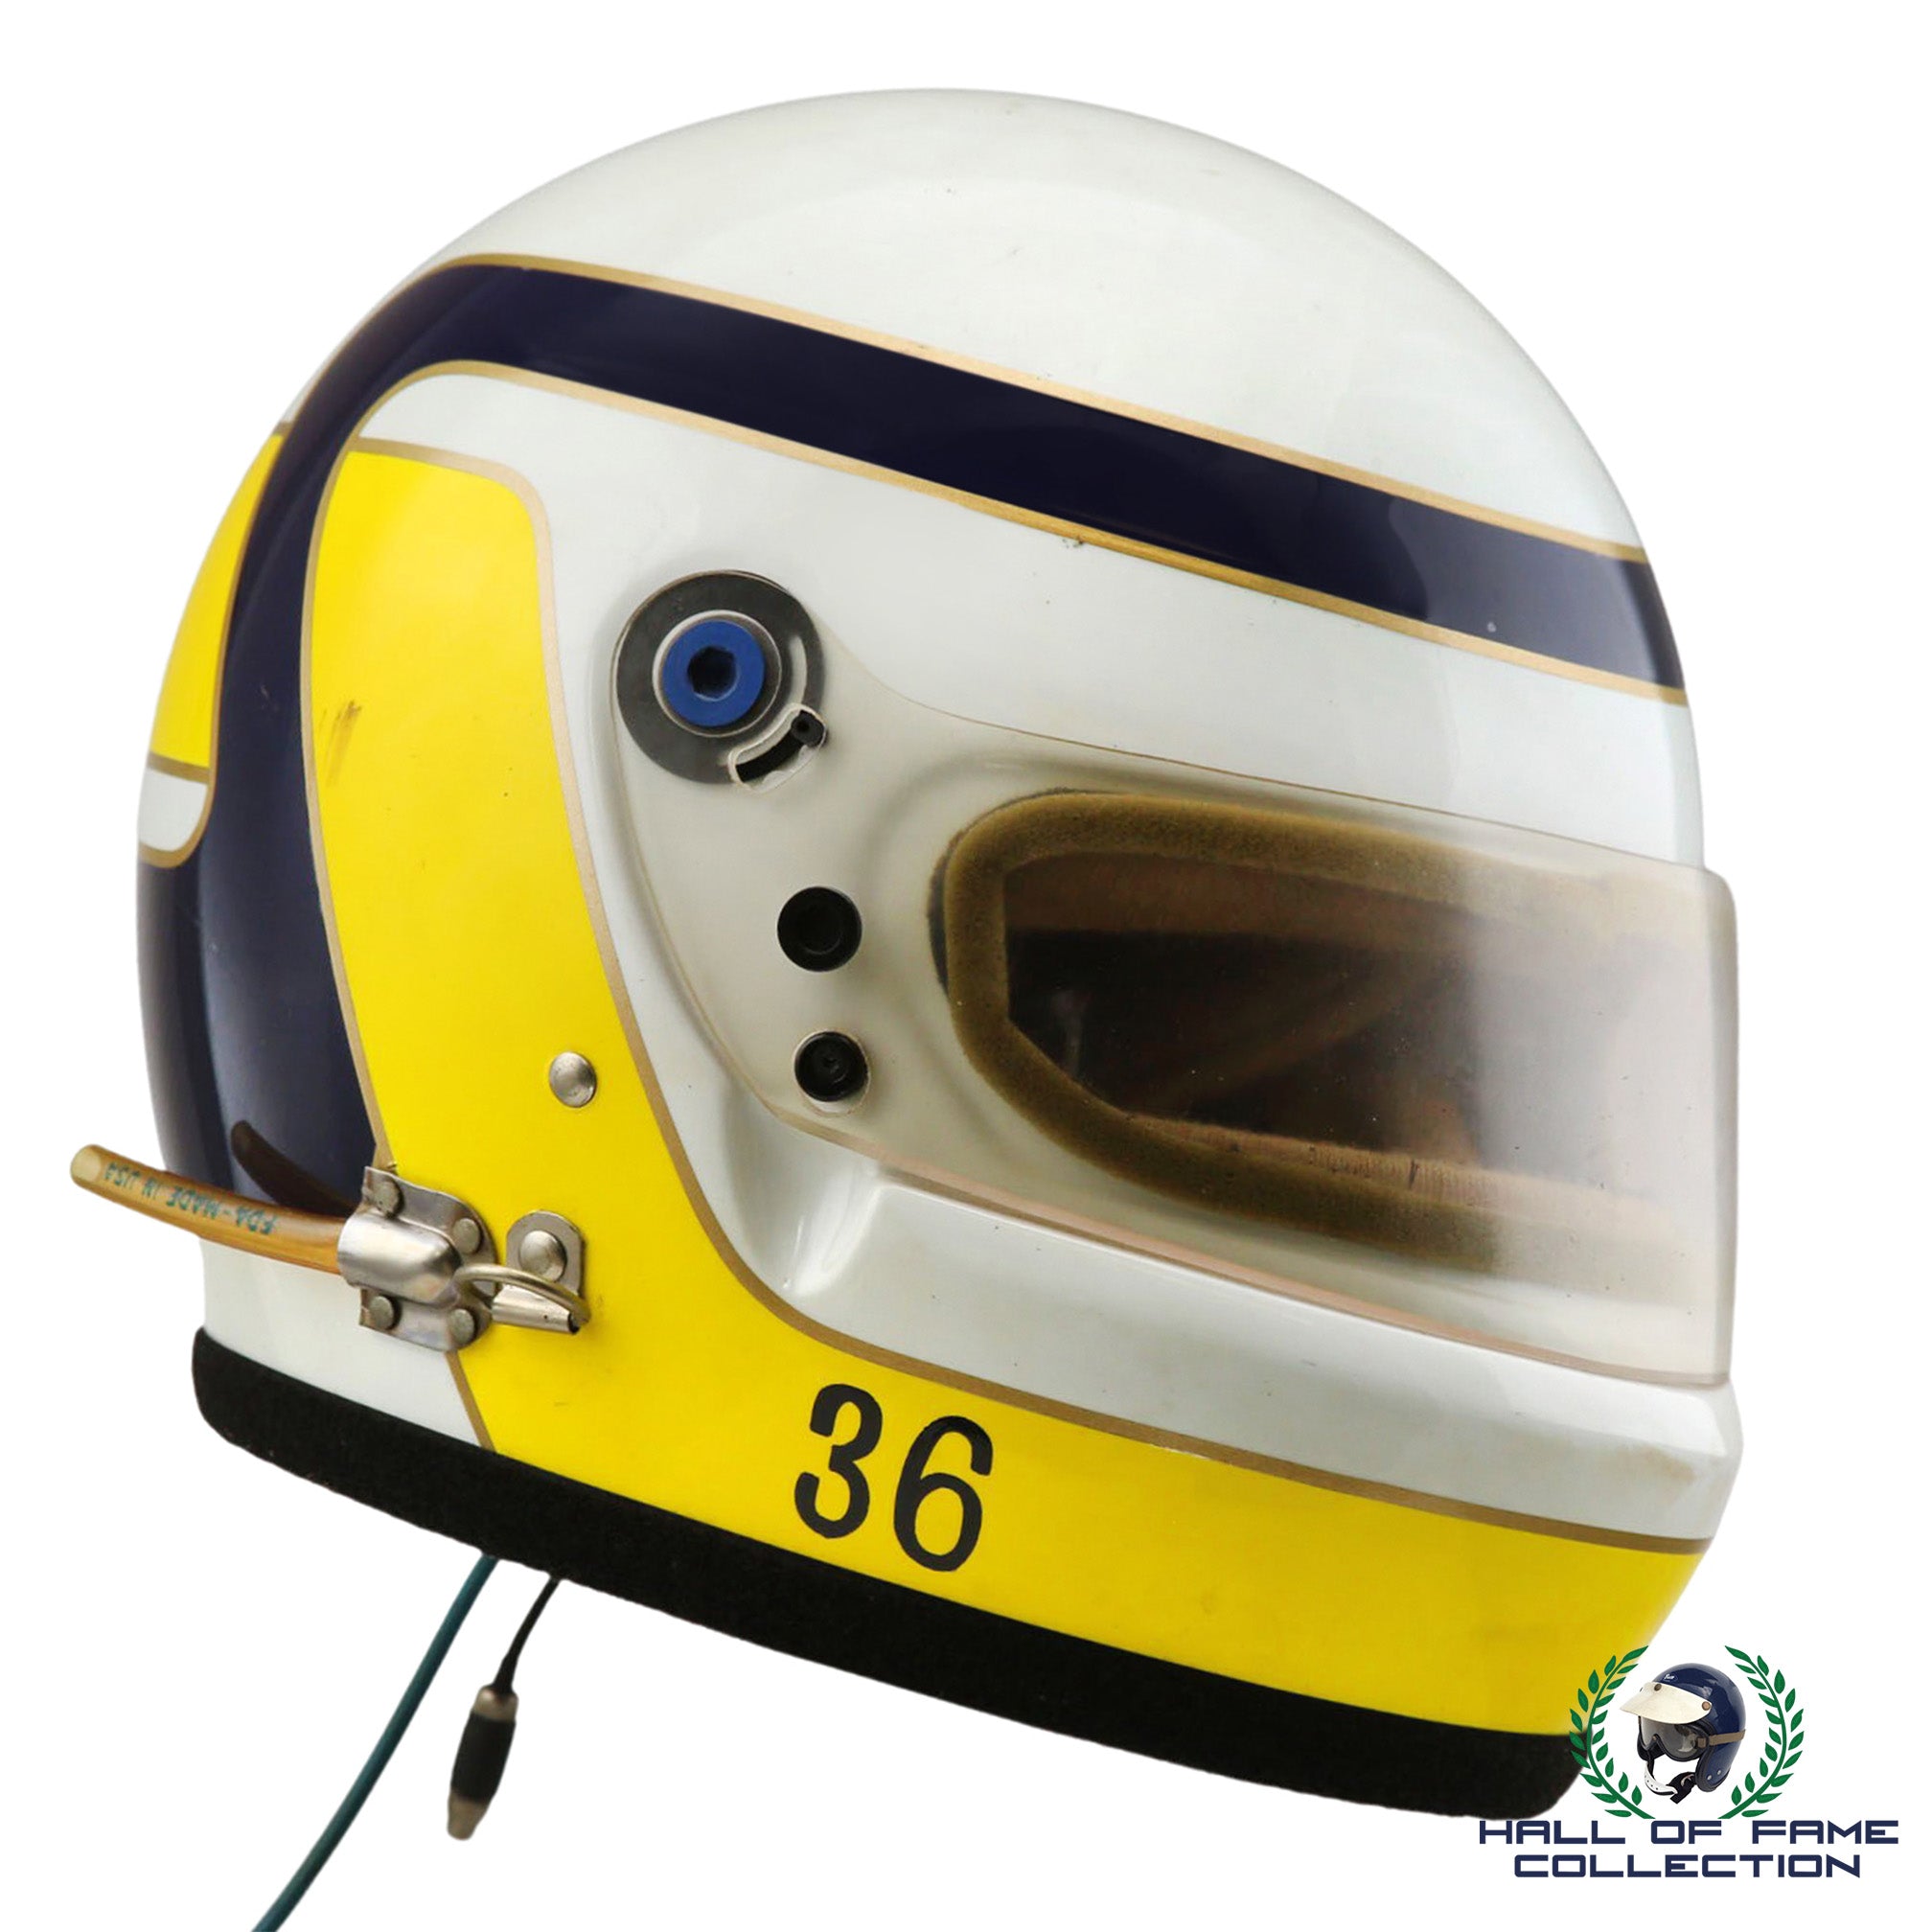 1989/90 Bernhard Jourdain Race Used Bell XFM-1 IndyCar Helmet